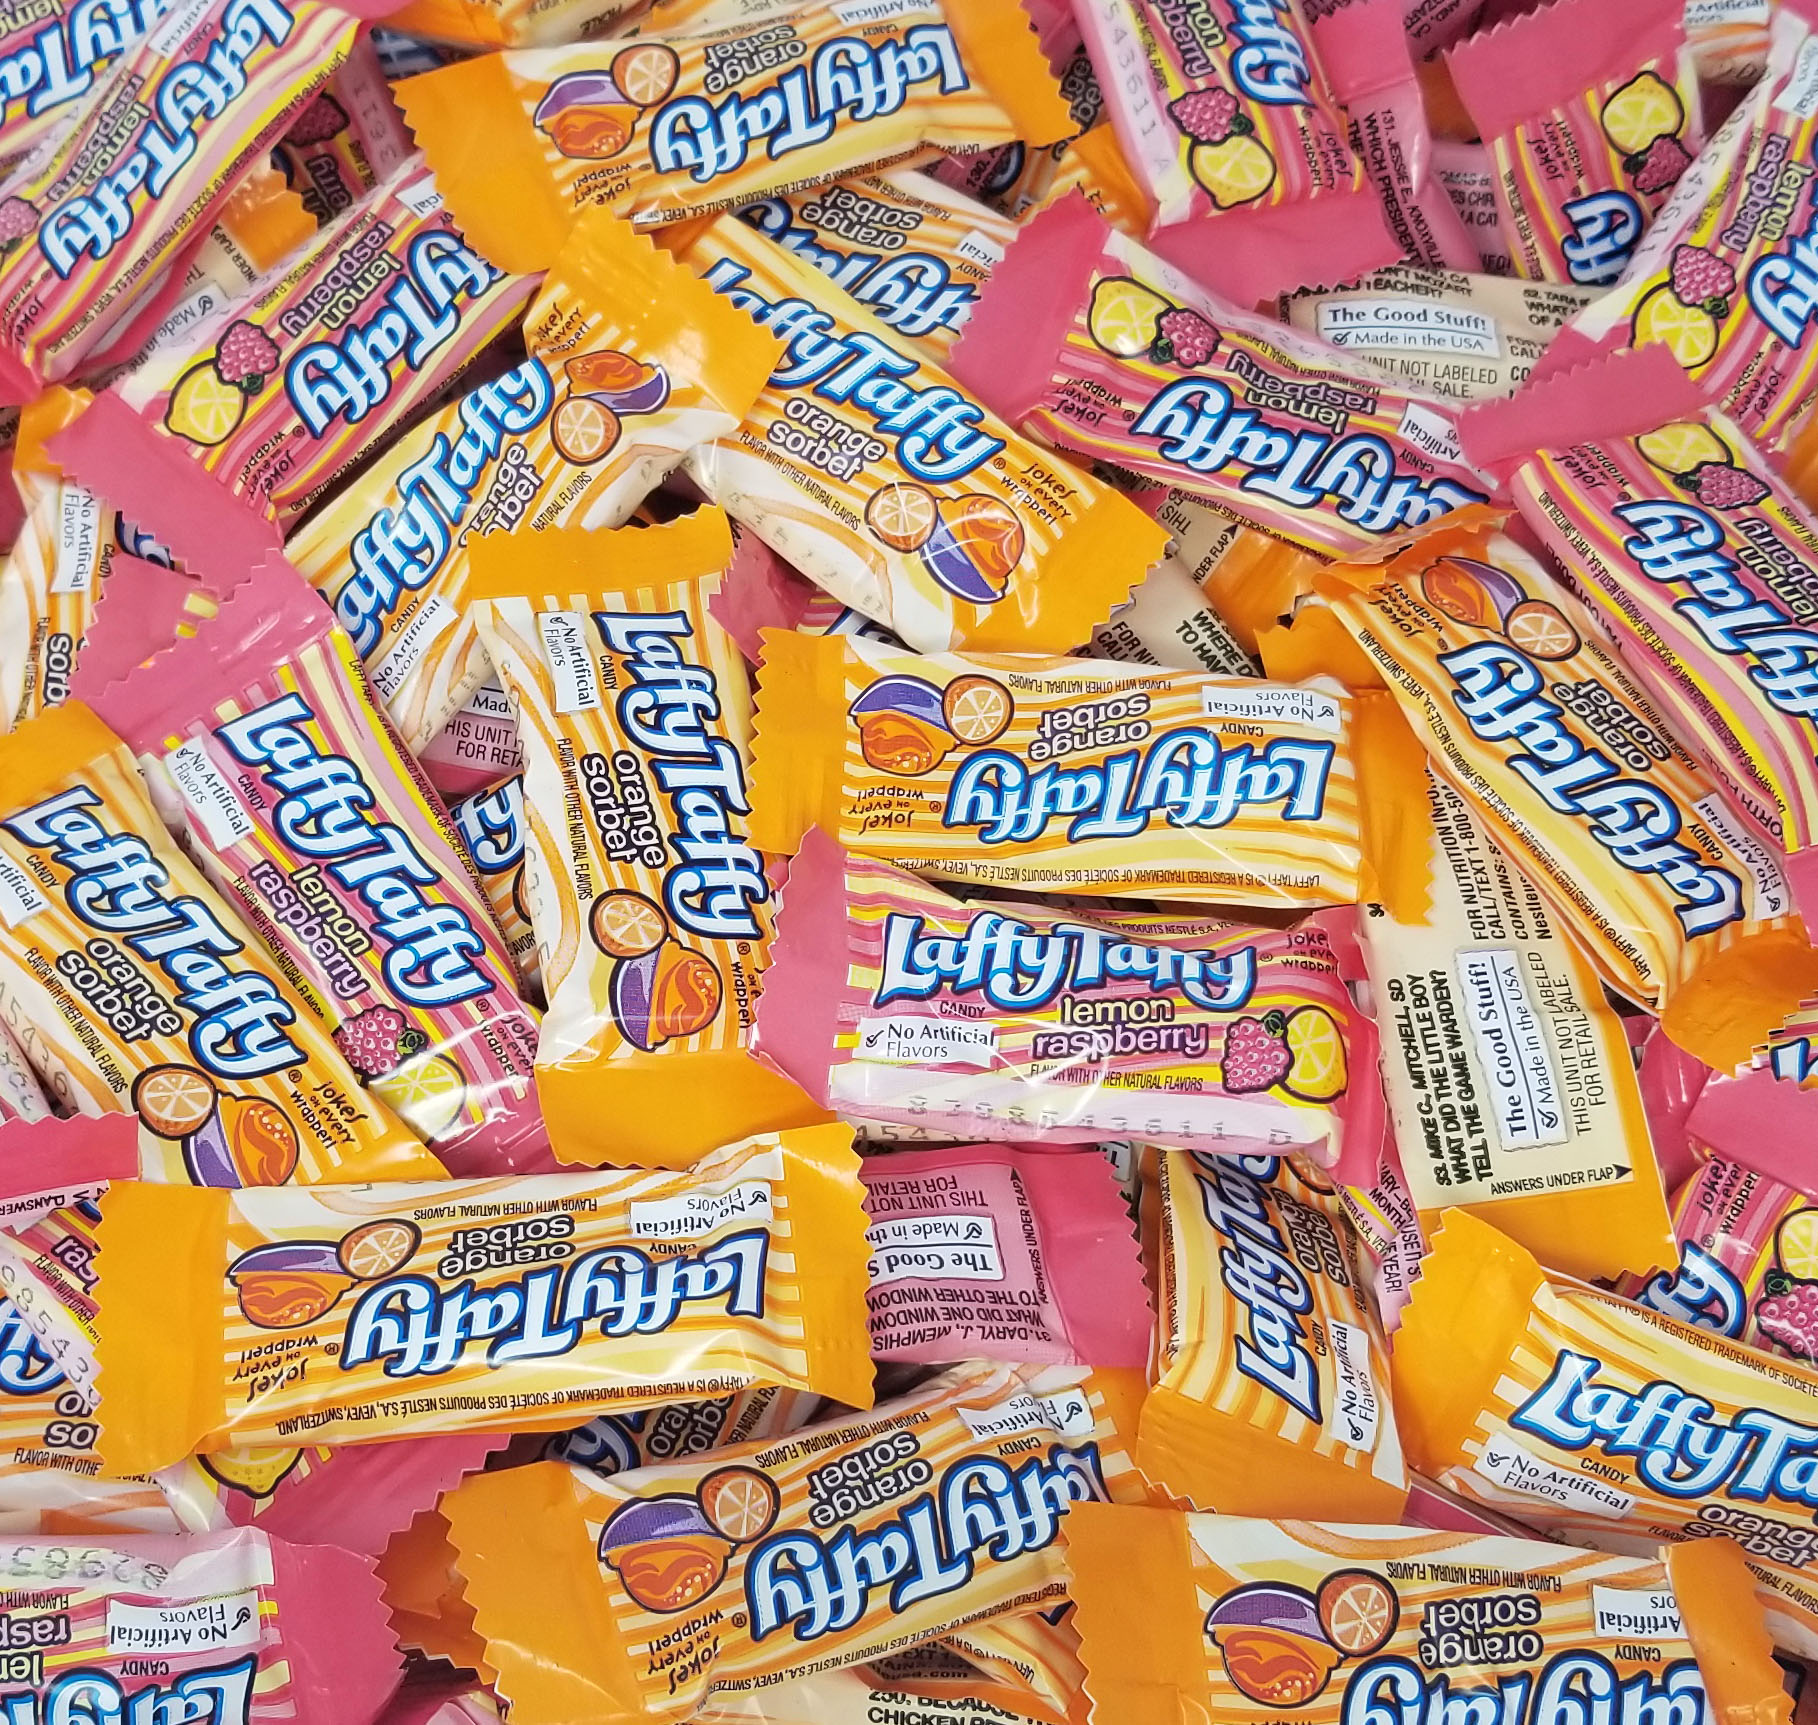 Laffy Taffy Orange Sorbet and Lemon Raspberry Flavored Fun Size Candy Bar, Tropical Taffy Mix, No Artificial Flavors, Bulk 2 Pounds Bag